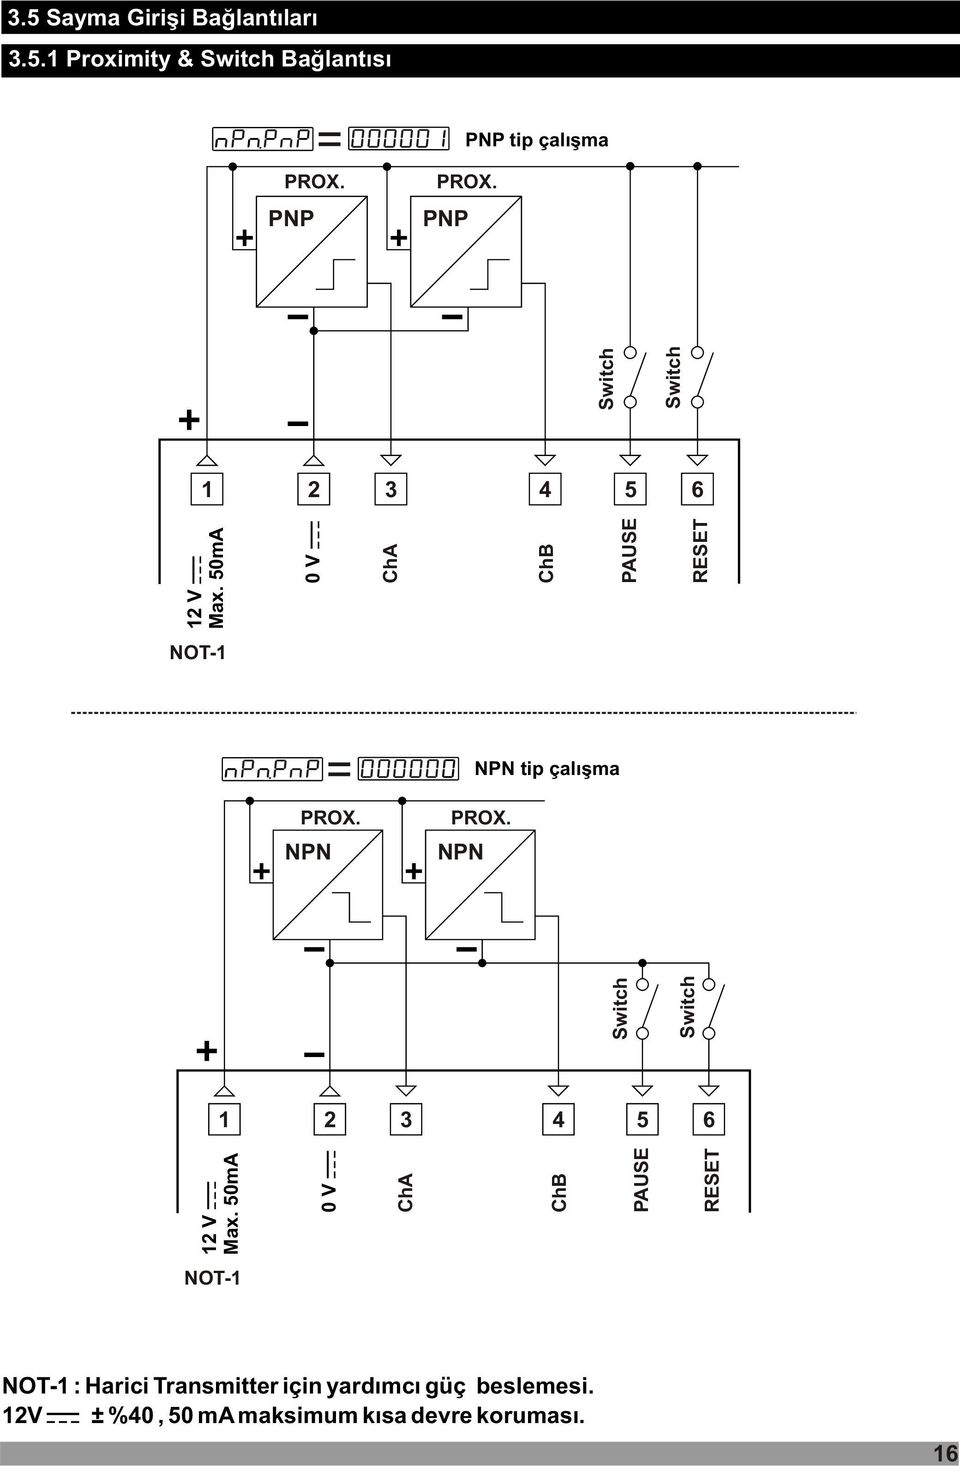 50mA 0 V ChA ChB AUSE Switch Switch NOT-1 NN tip çalýþma 12 V Max.